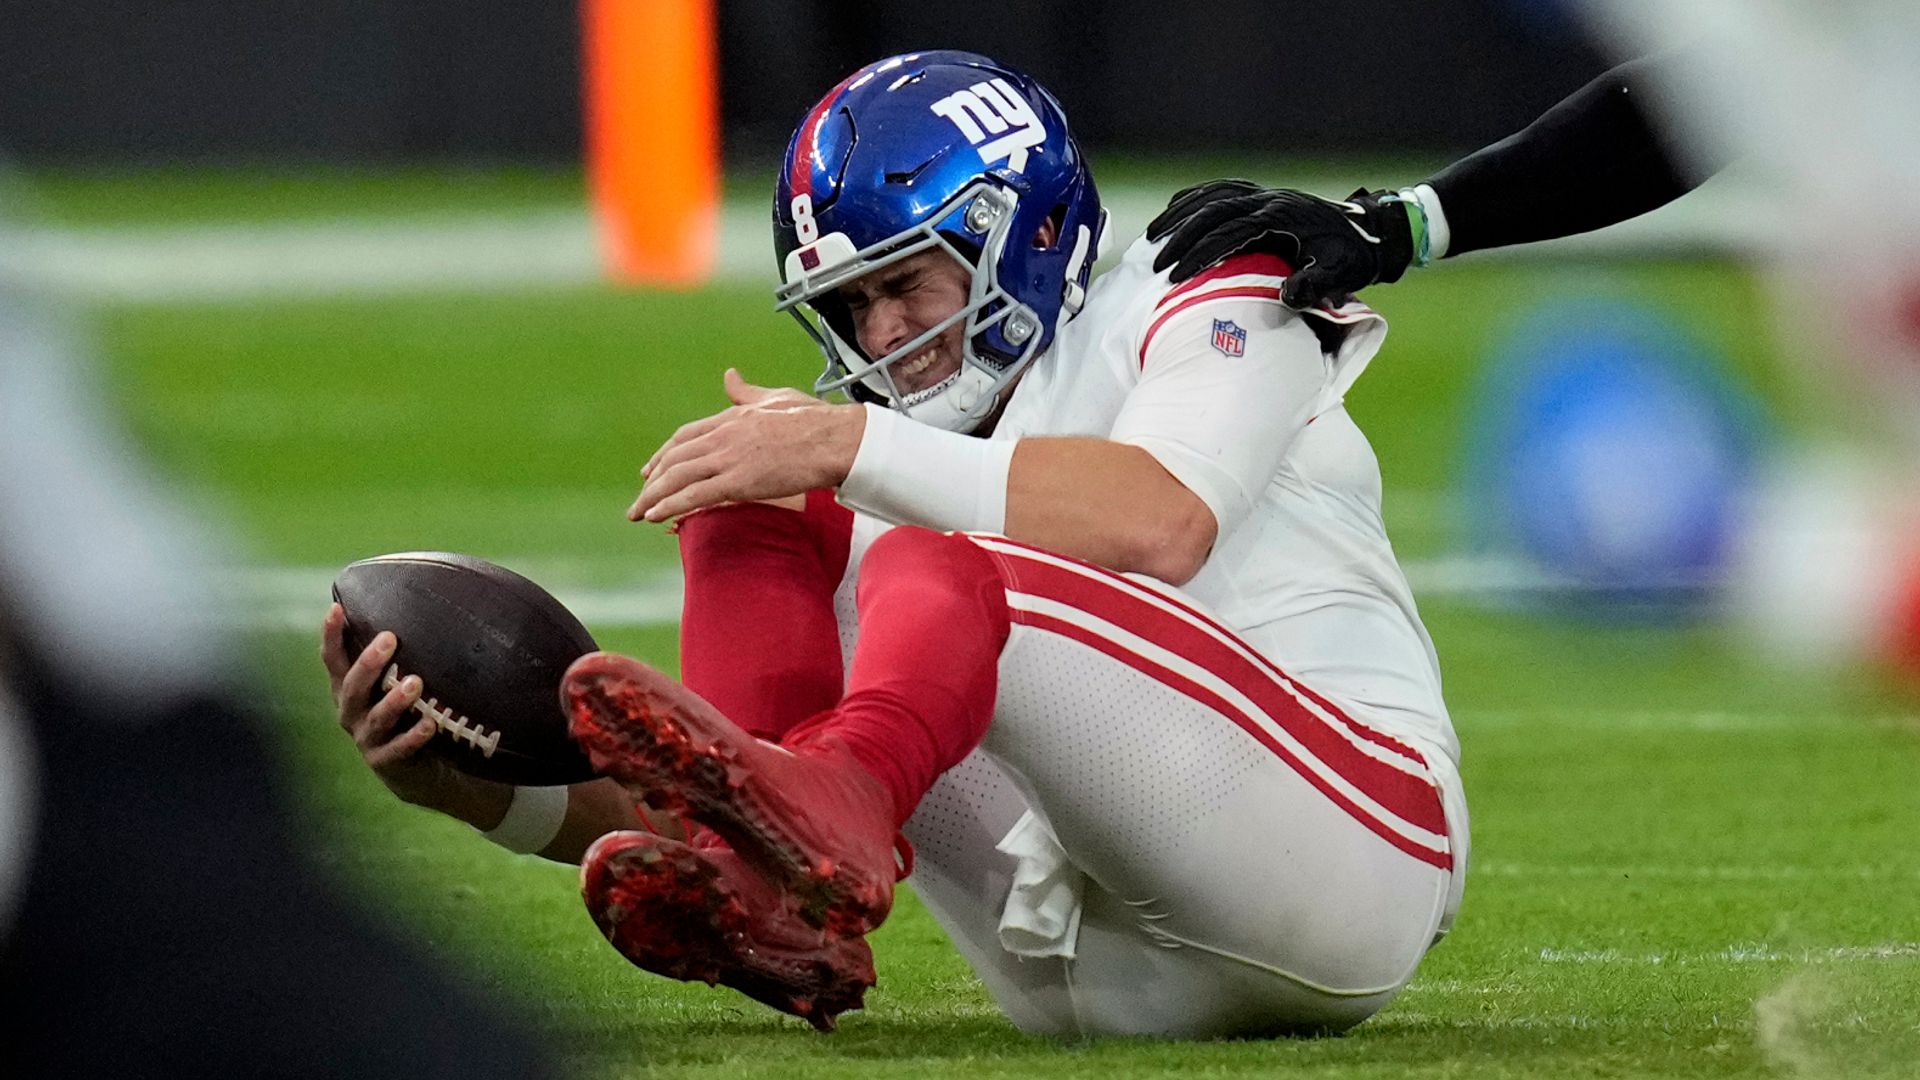 Giants quarterback Jones' season ended by ACL injury